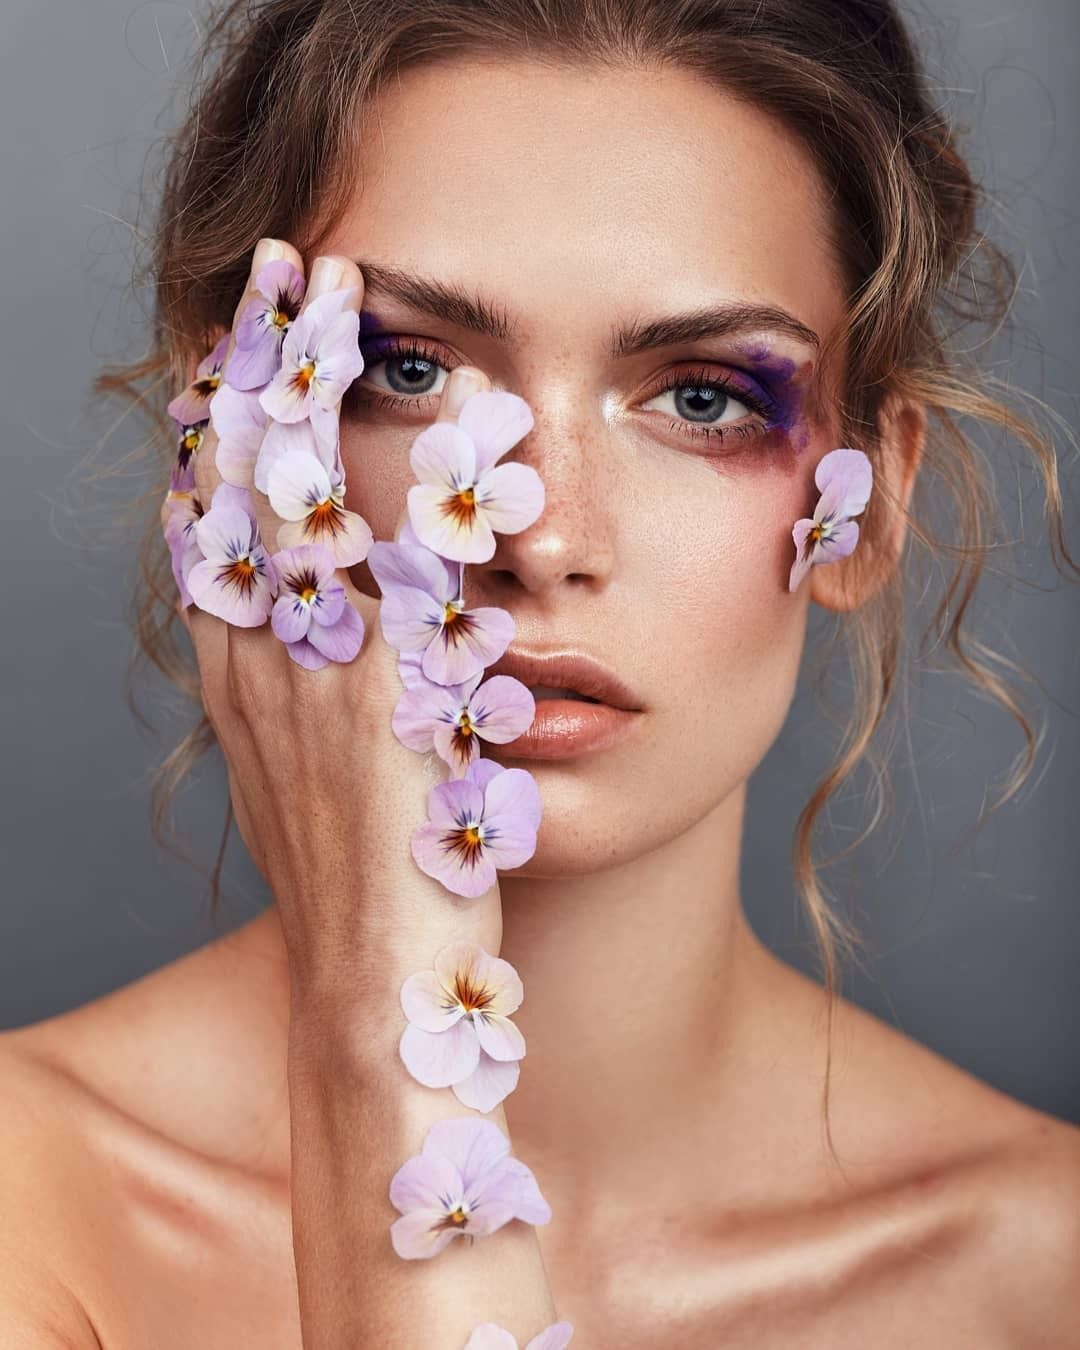 12 beauty Photoshoot flowers ideas